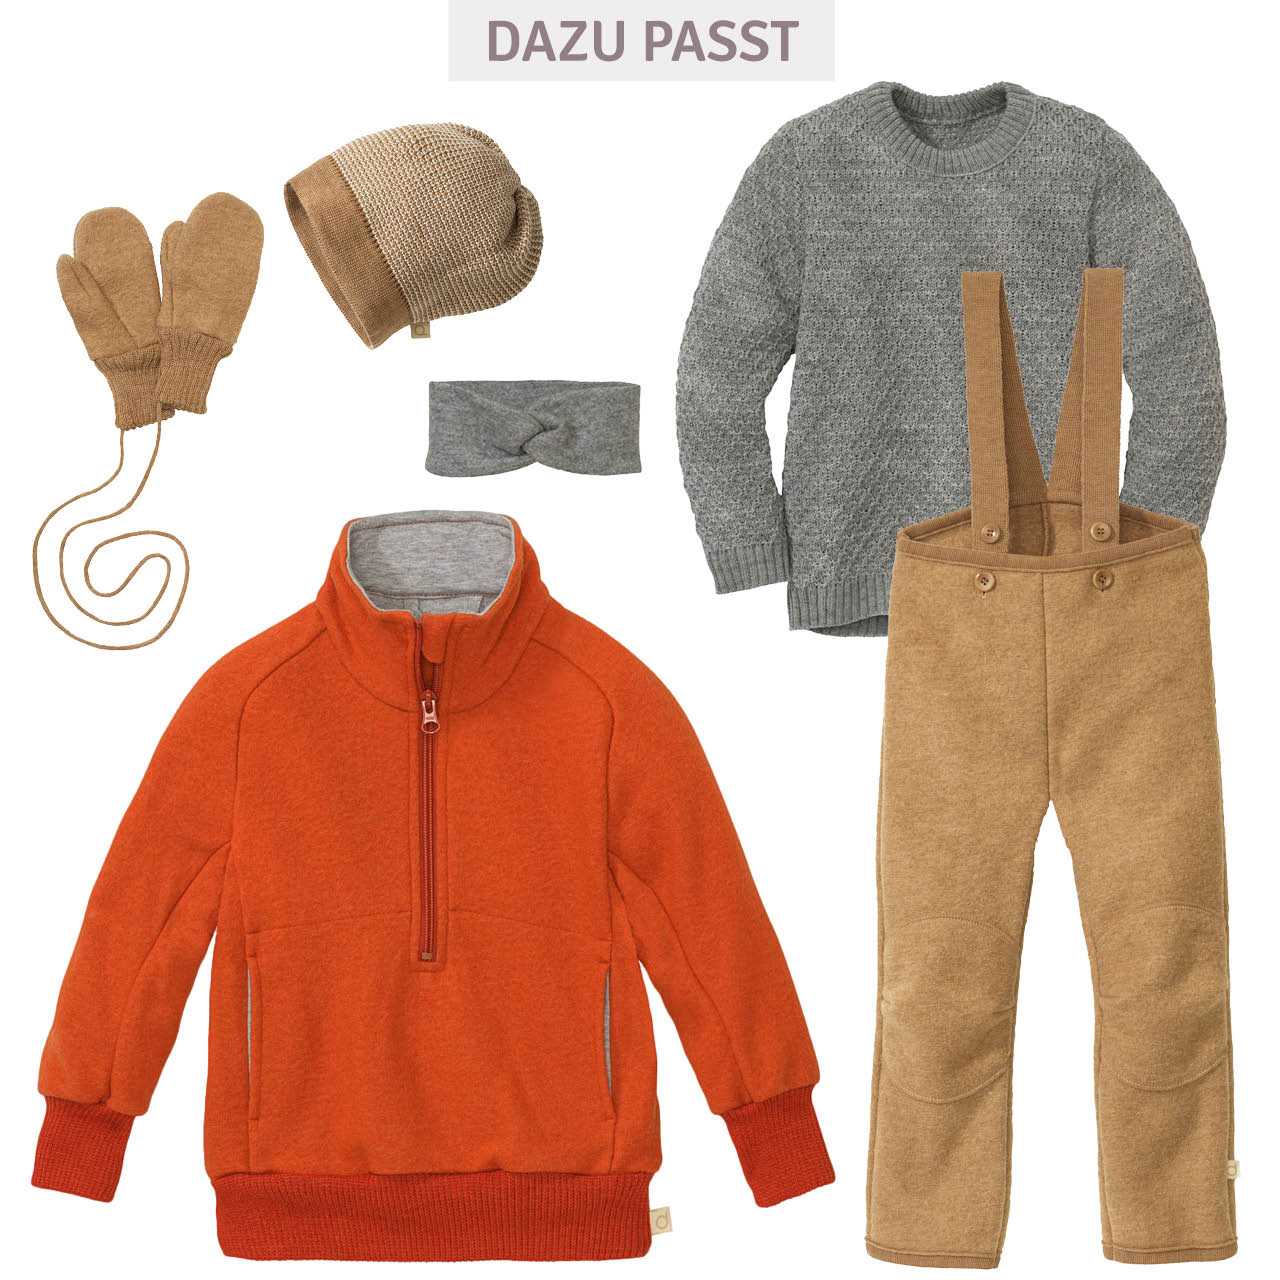 Pullover Half-Zip Sweater orange